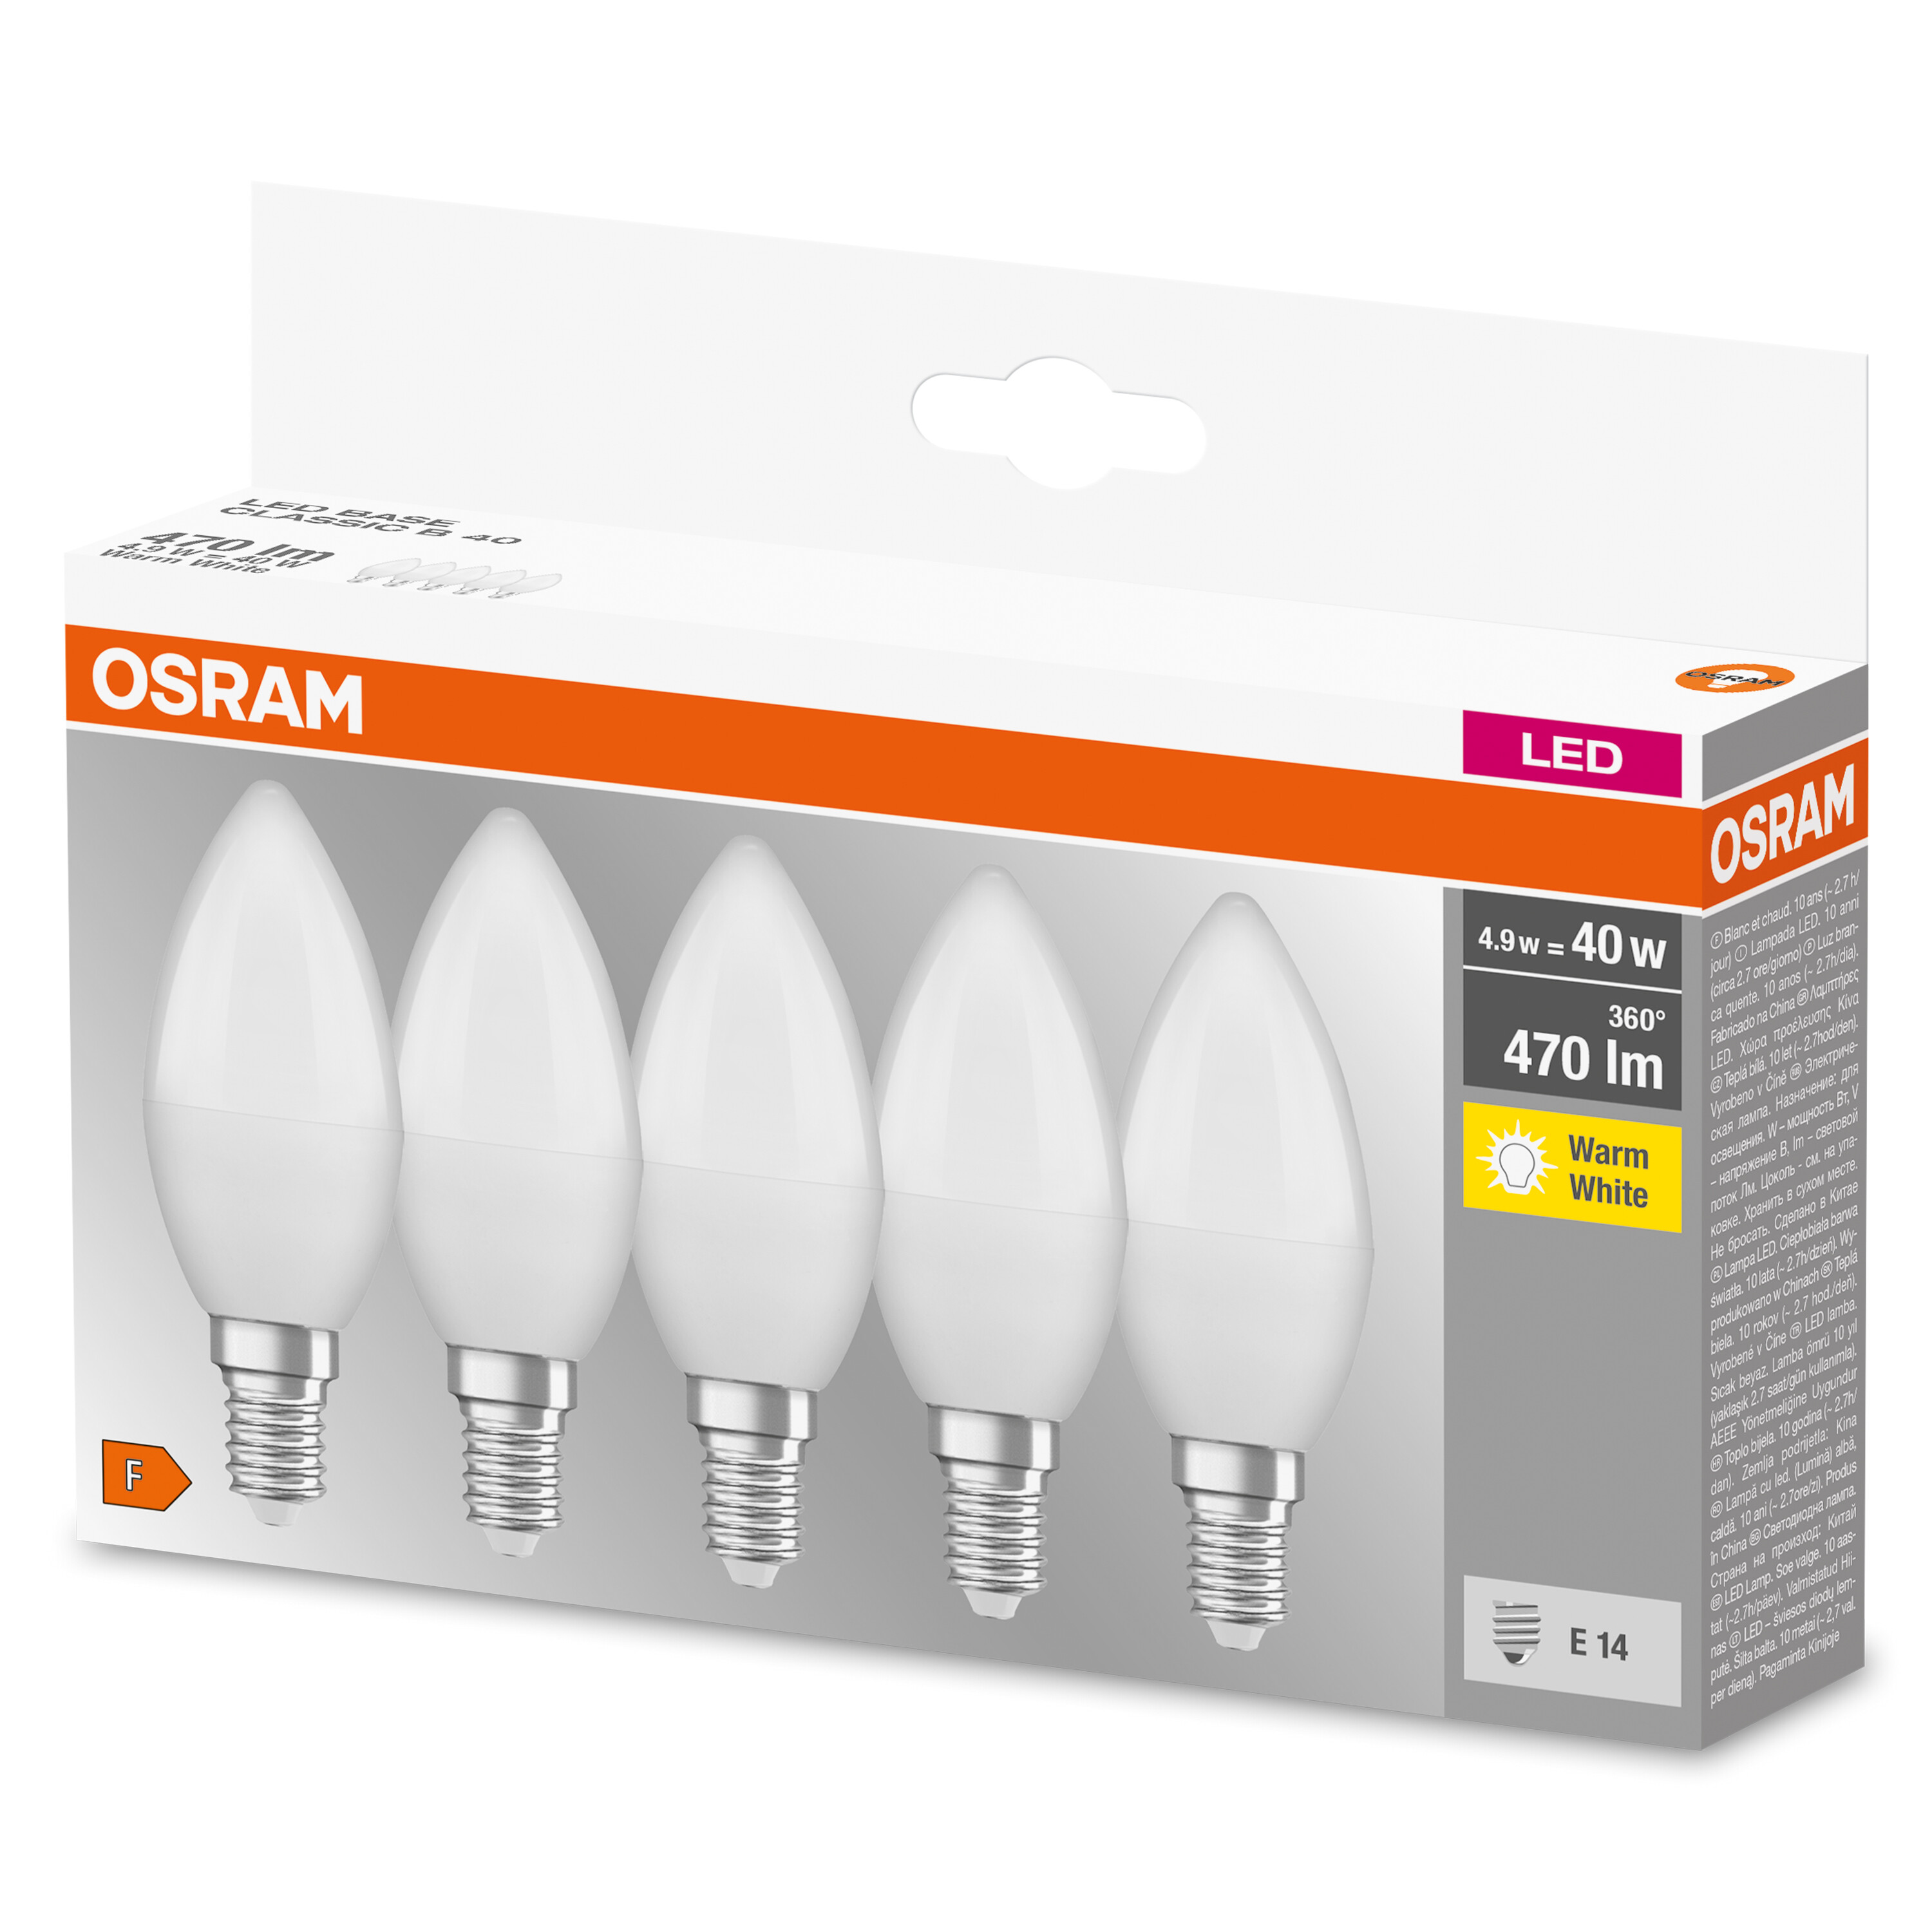 Warmweiß LED 470 BASE lumen LED B CLASSIC Lampe OSRAM 